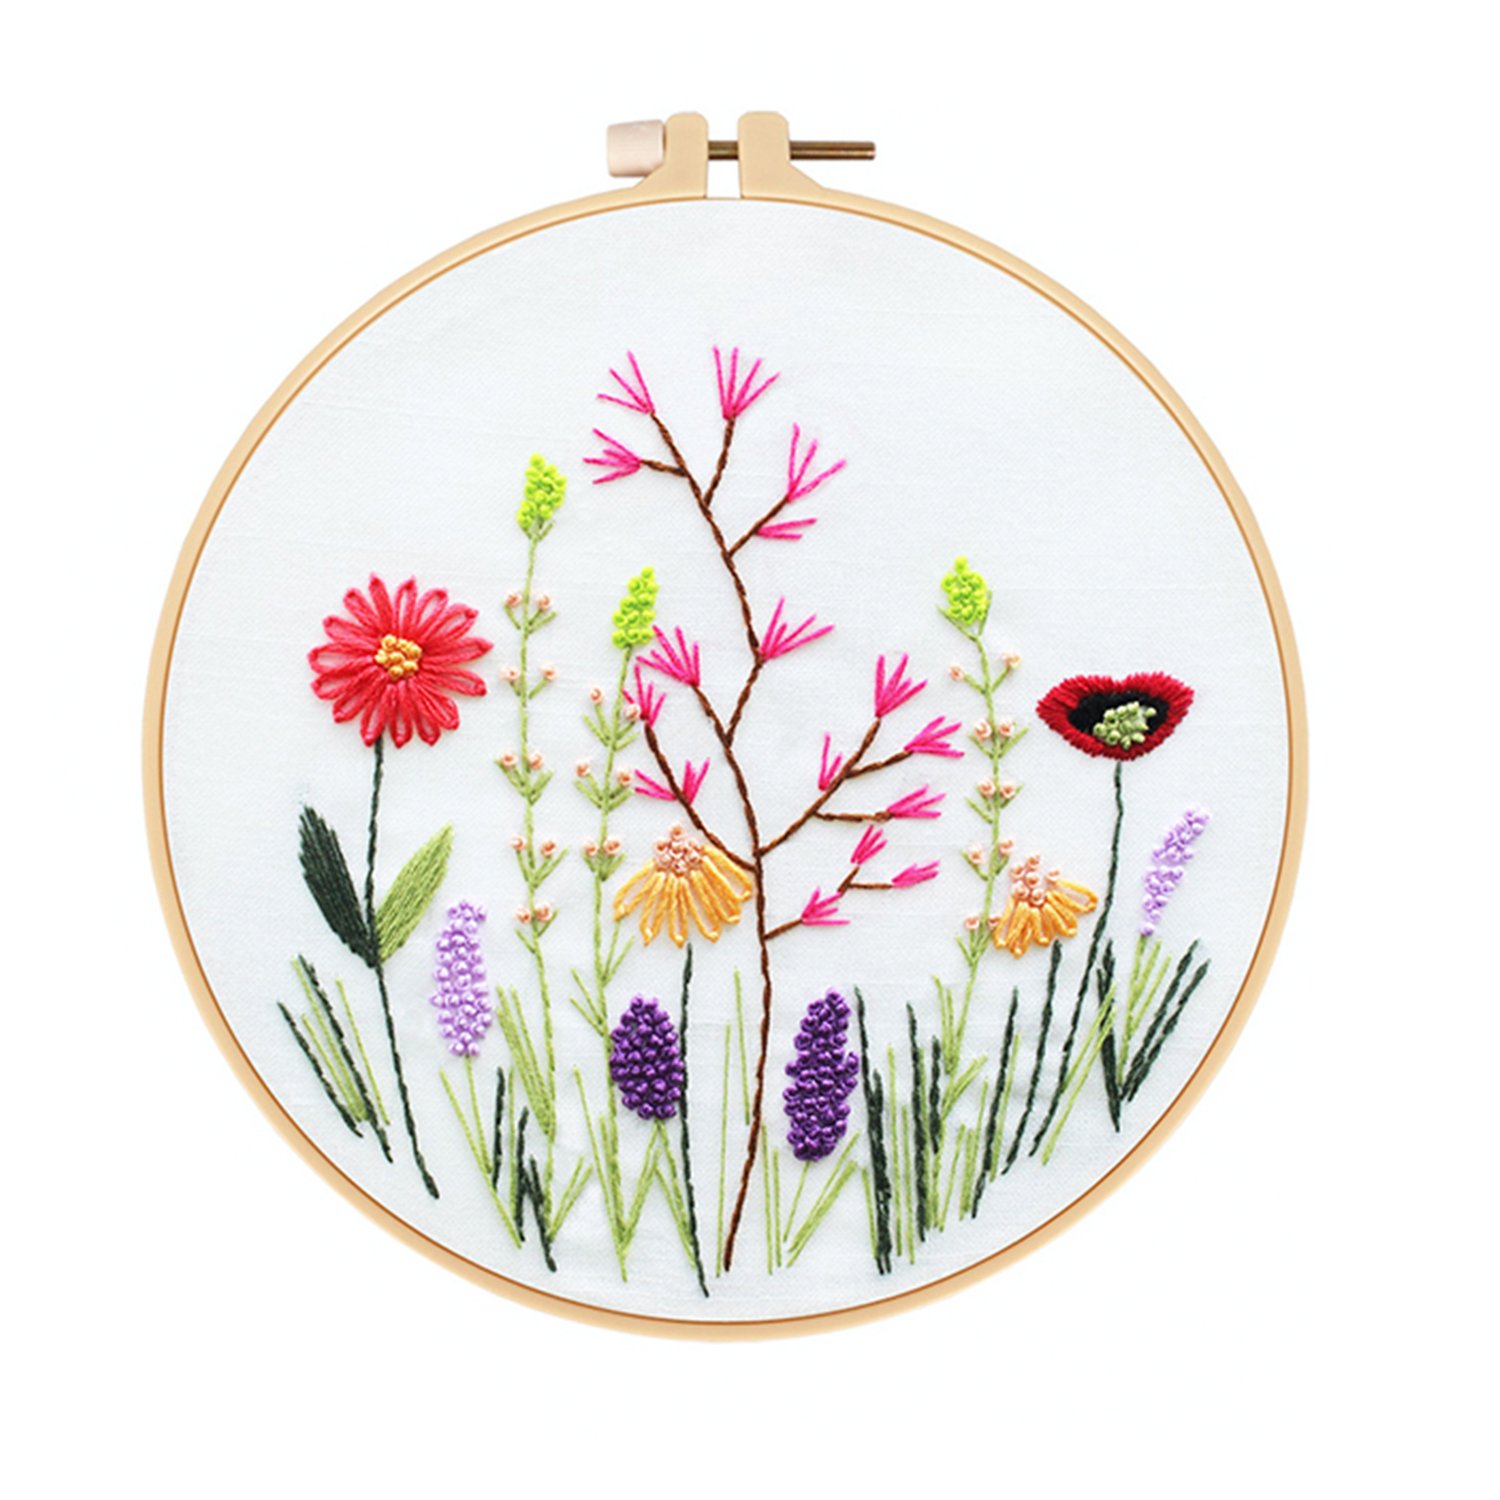 DIY Handmade Embroidery Cross stitch kit - Blooing Flower Pattern